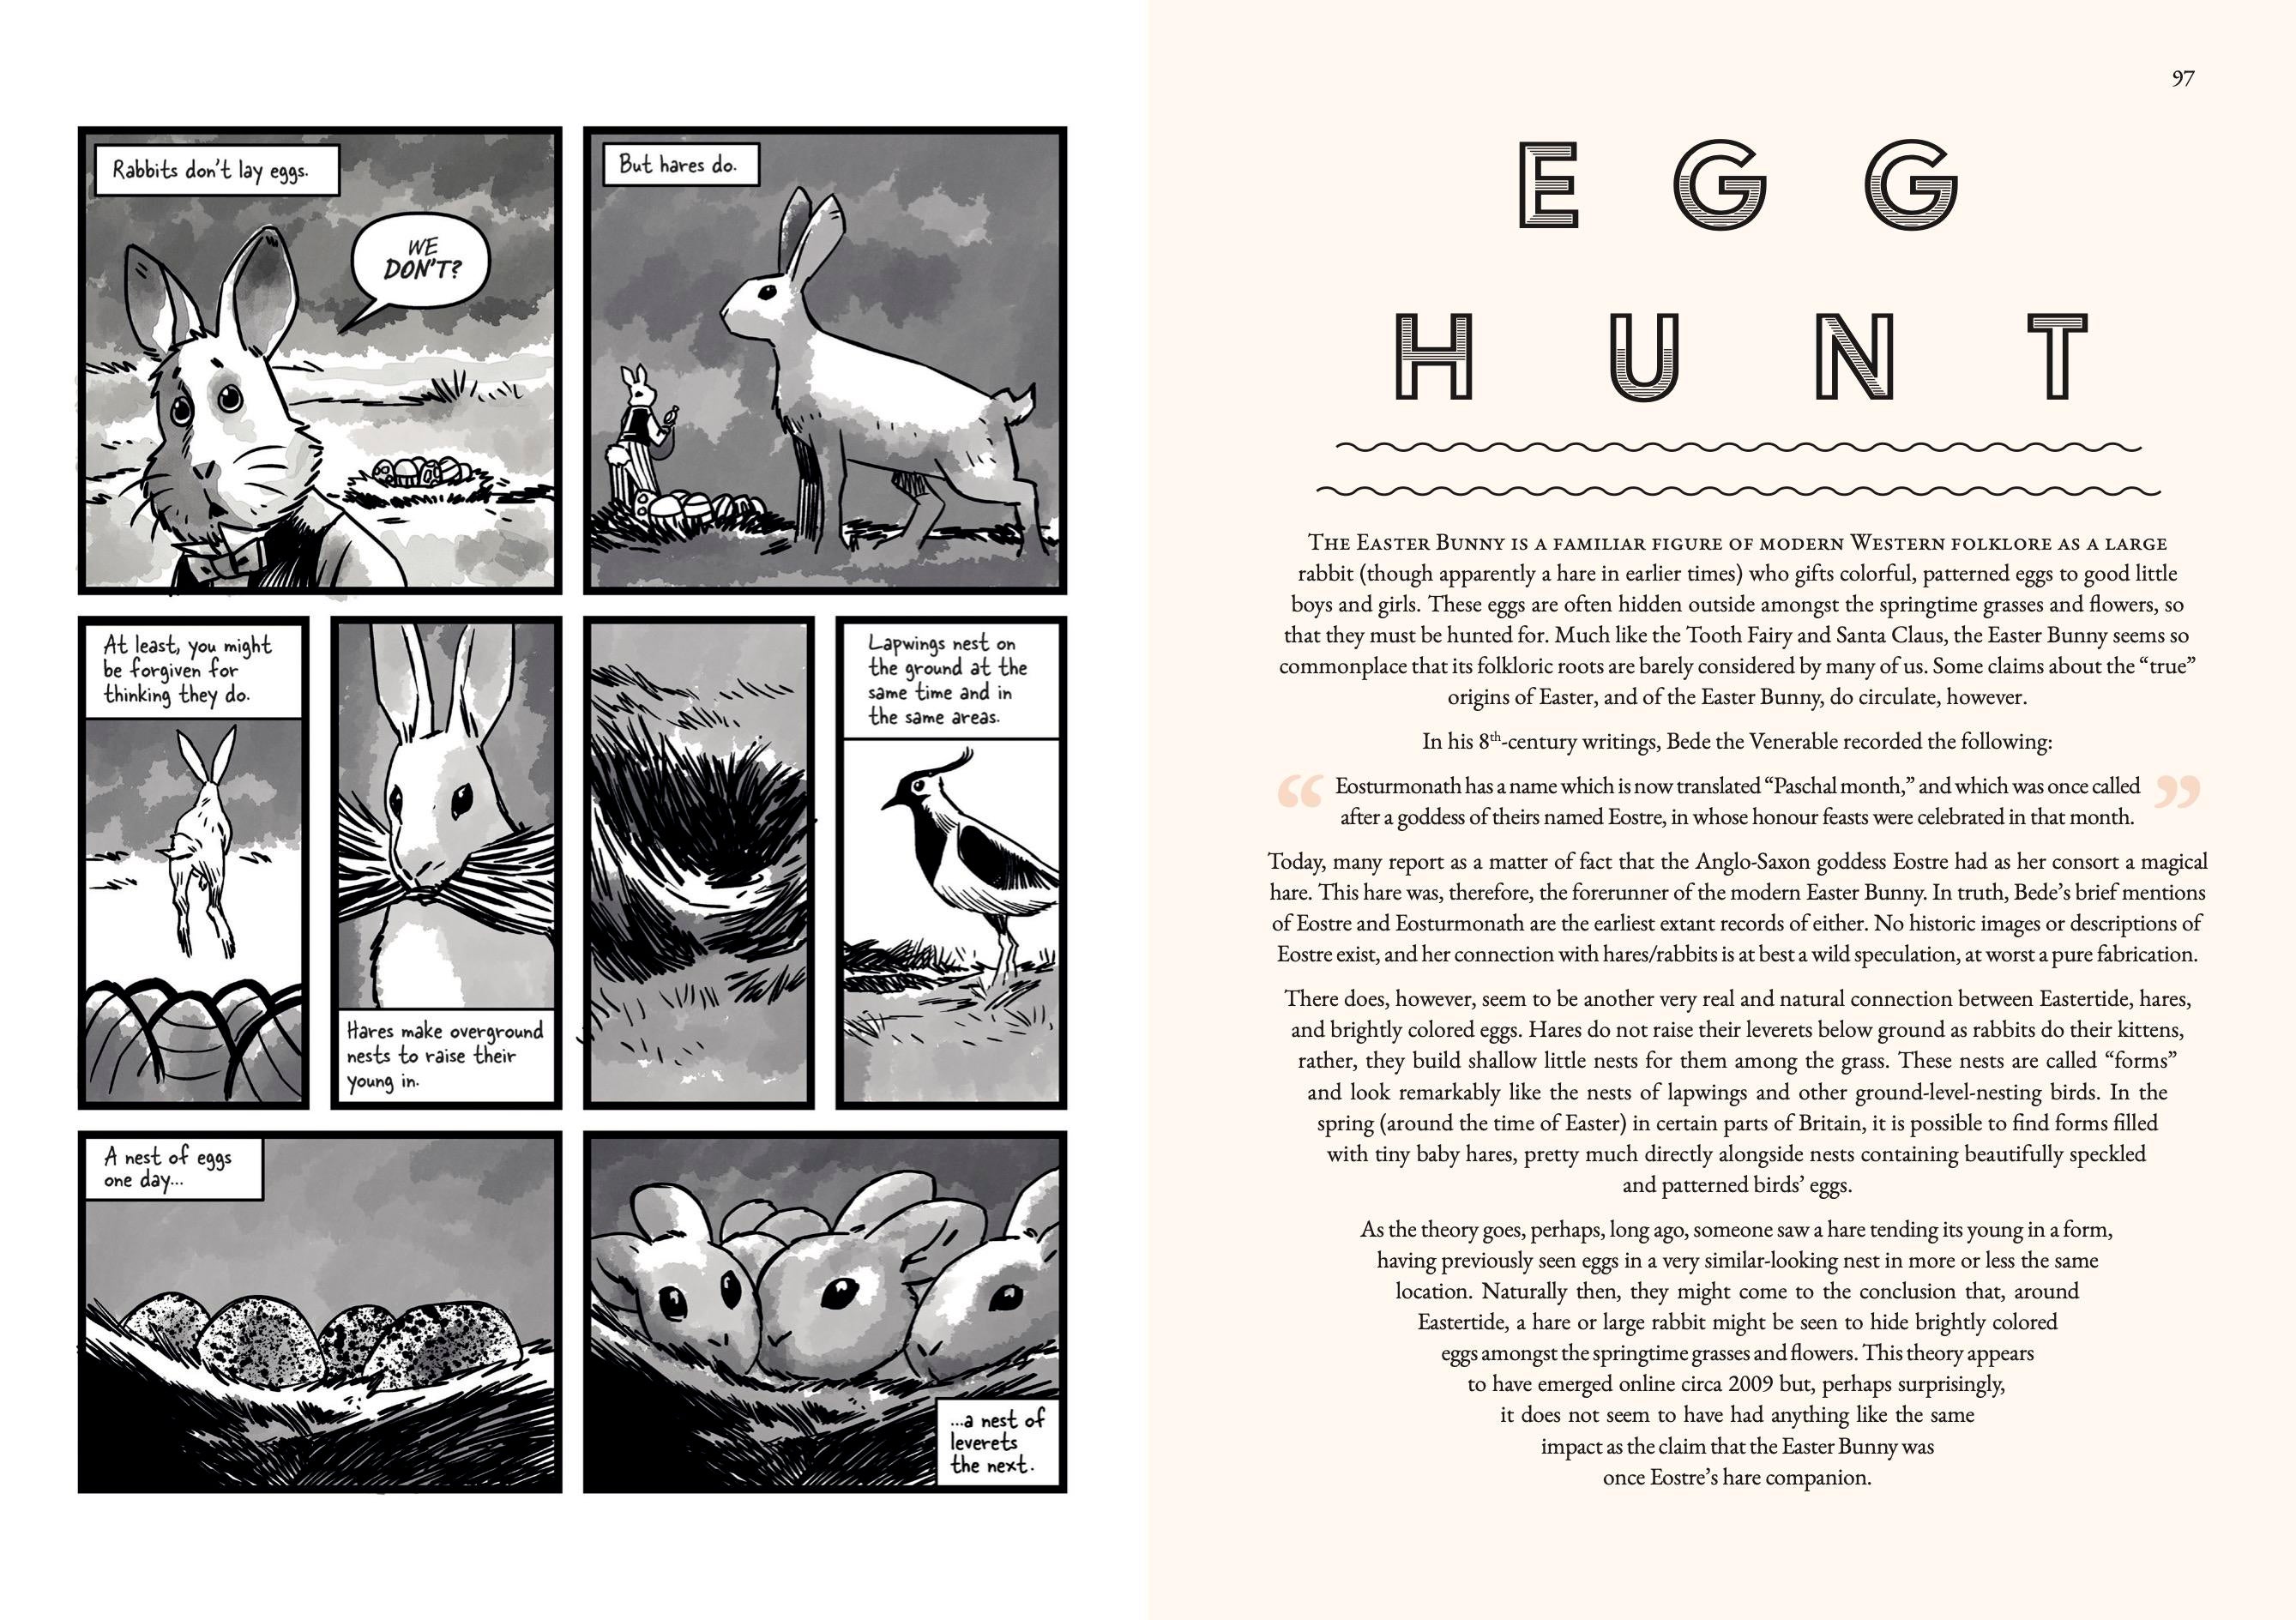 facinating-folklore-exclusive-spread-1-egg-hunt.jpg